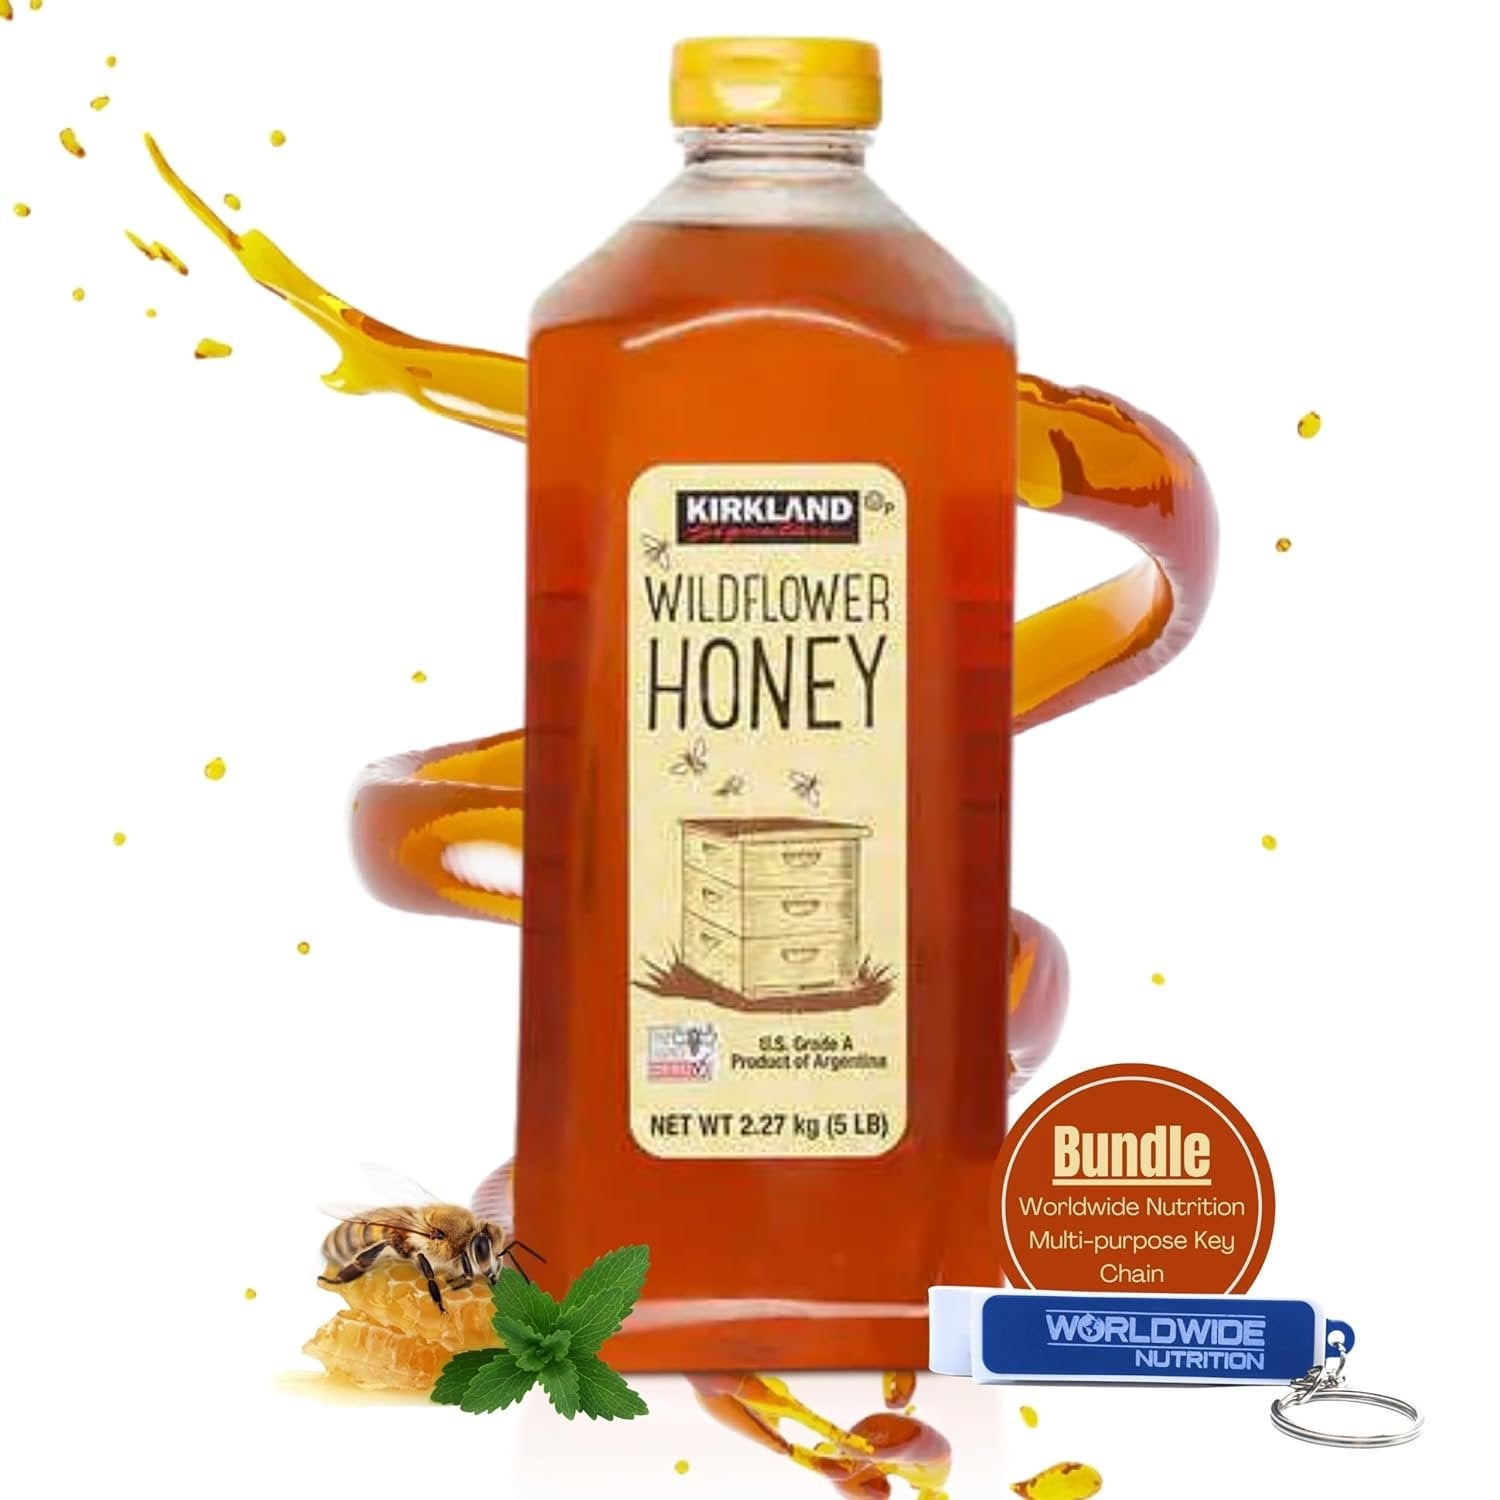 Kirkland Signature Wildflower Honey U.S Grade A - Premium Quality - Sugar-Free - Pack of 1 - 2.27kg (5LB) - with Multi-Purpose Keychain